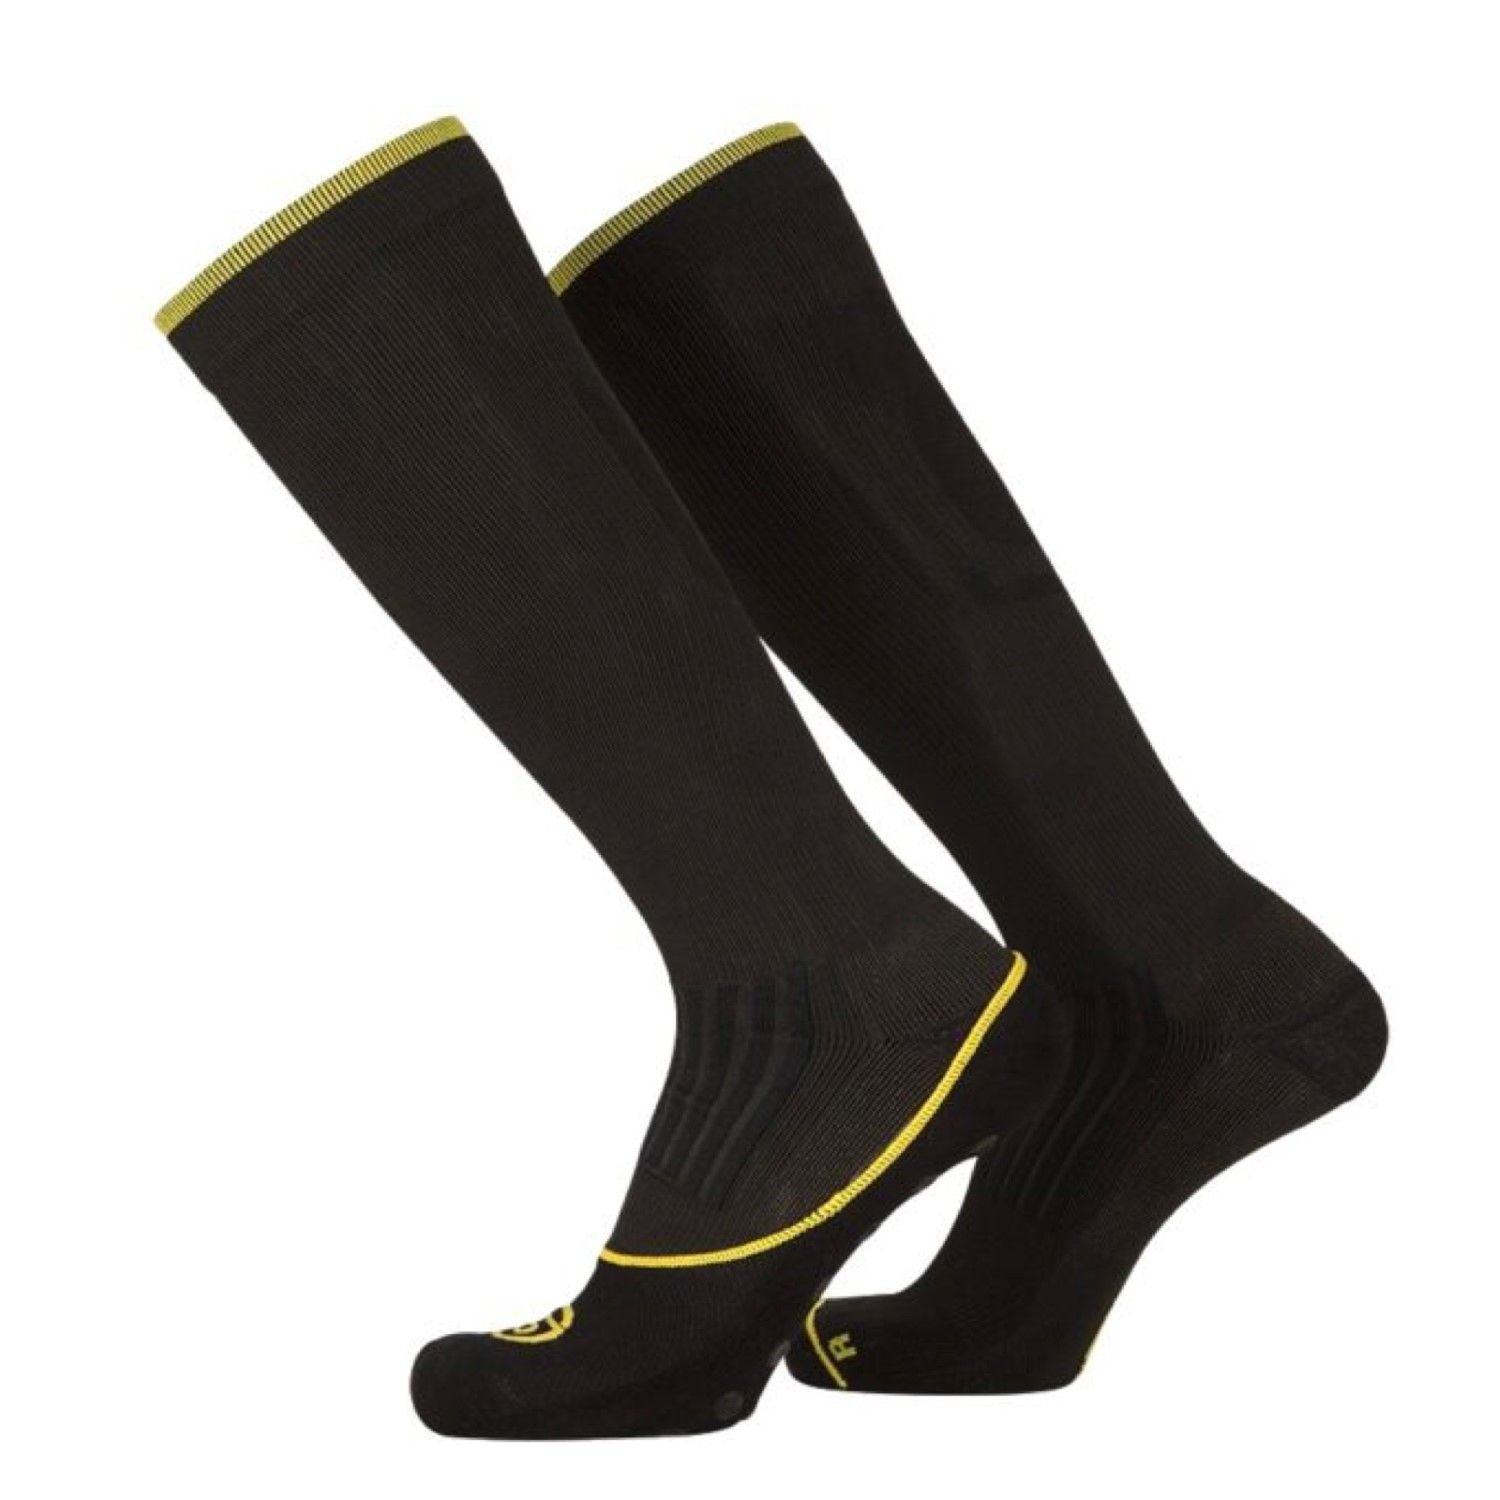 SKINS Unisex Series-3 Travel Socks - Black